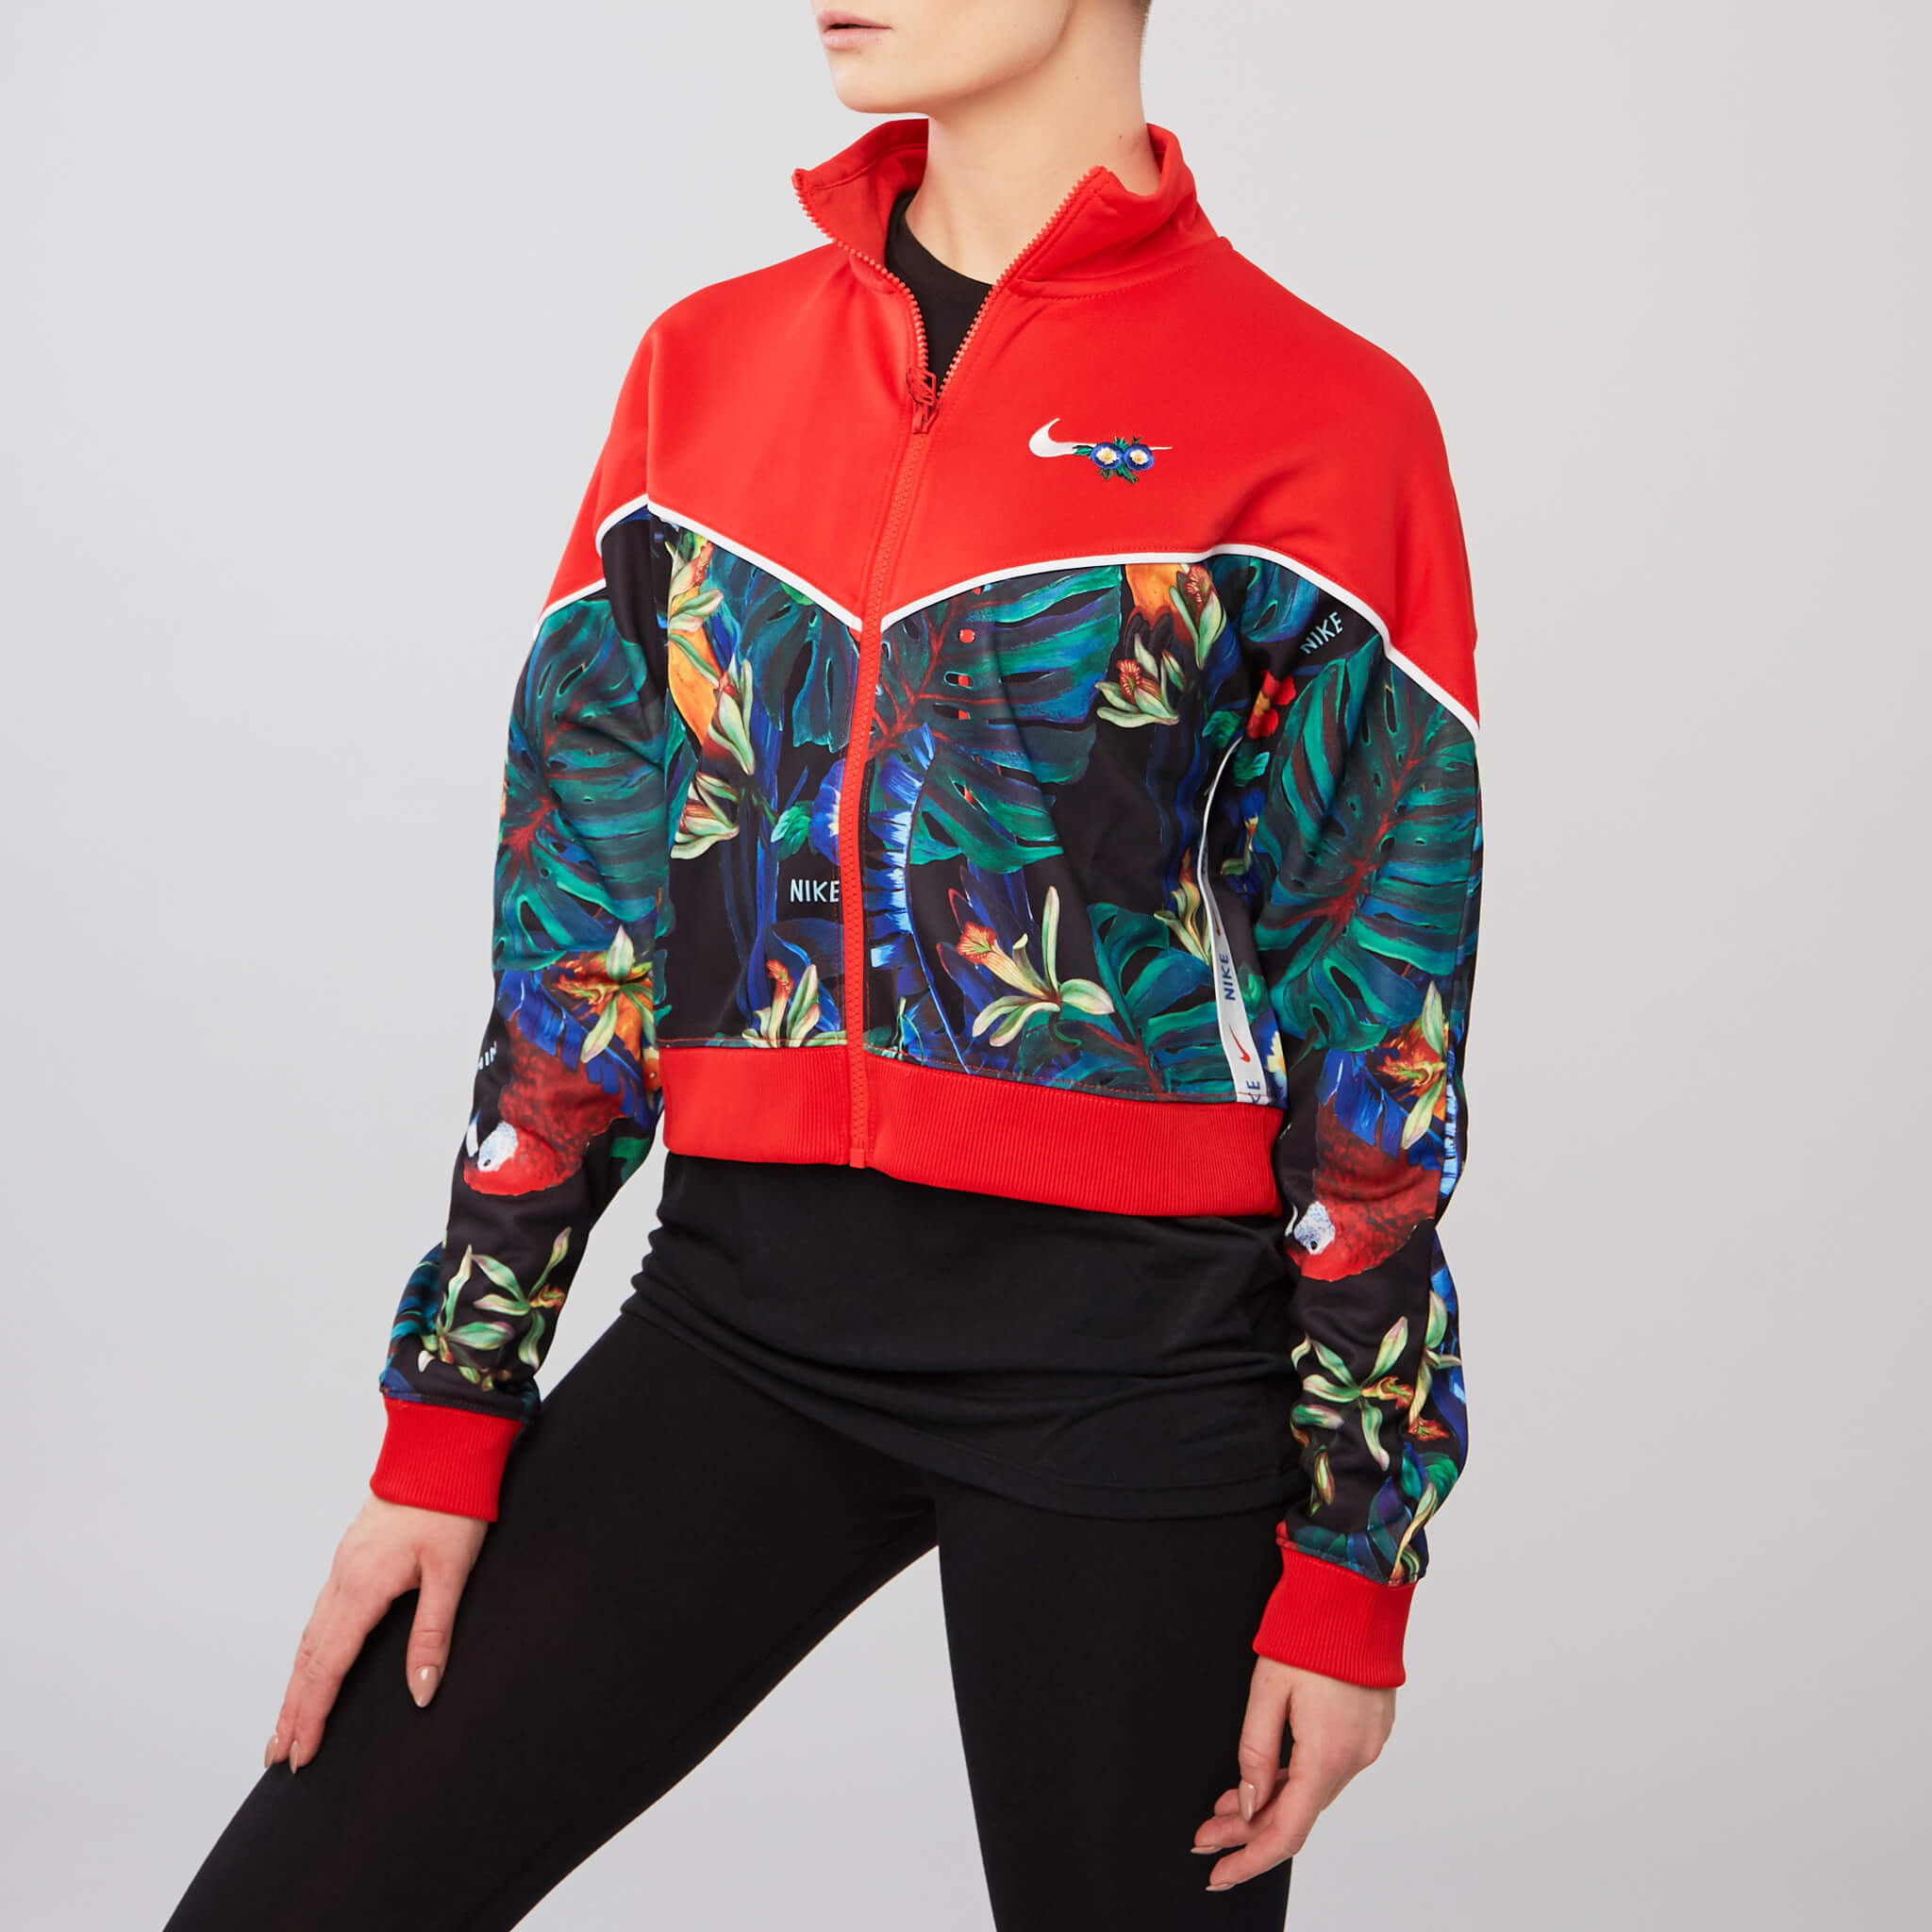 Nike Women’s Red Tropical Hyper Femme Print Tracksuit Jacket Nike ktmart 1